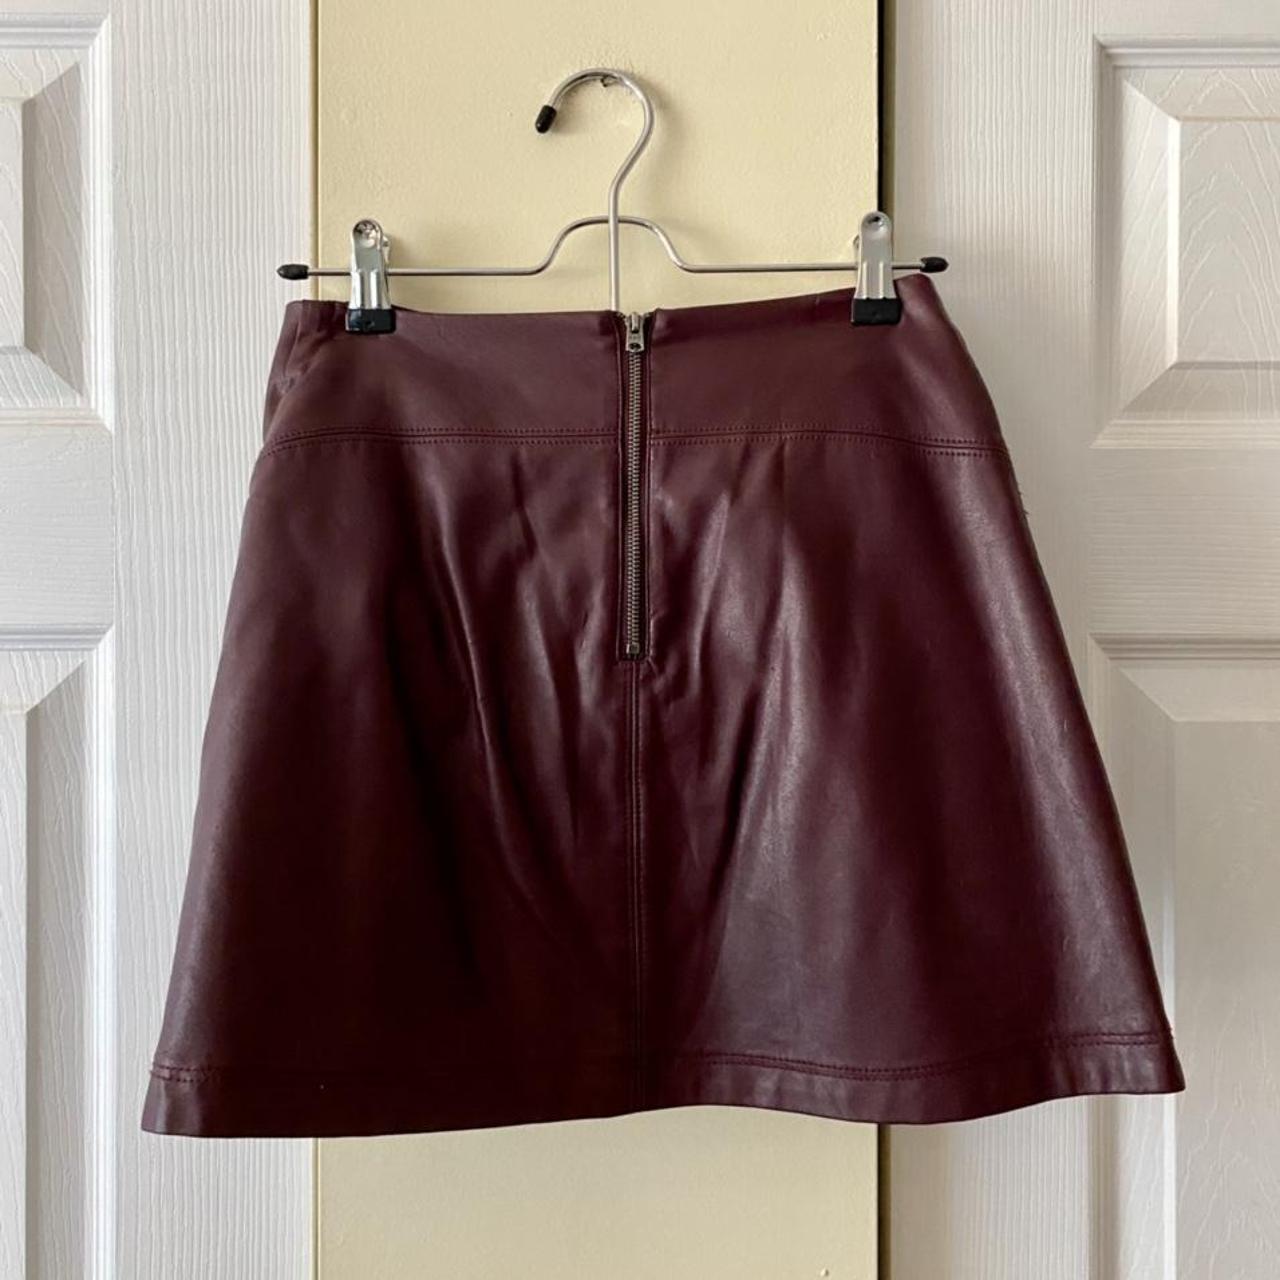 Abercrombie & Fitch Women's Burgundy Skirt (2)